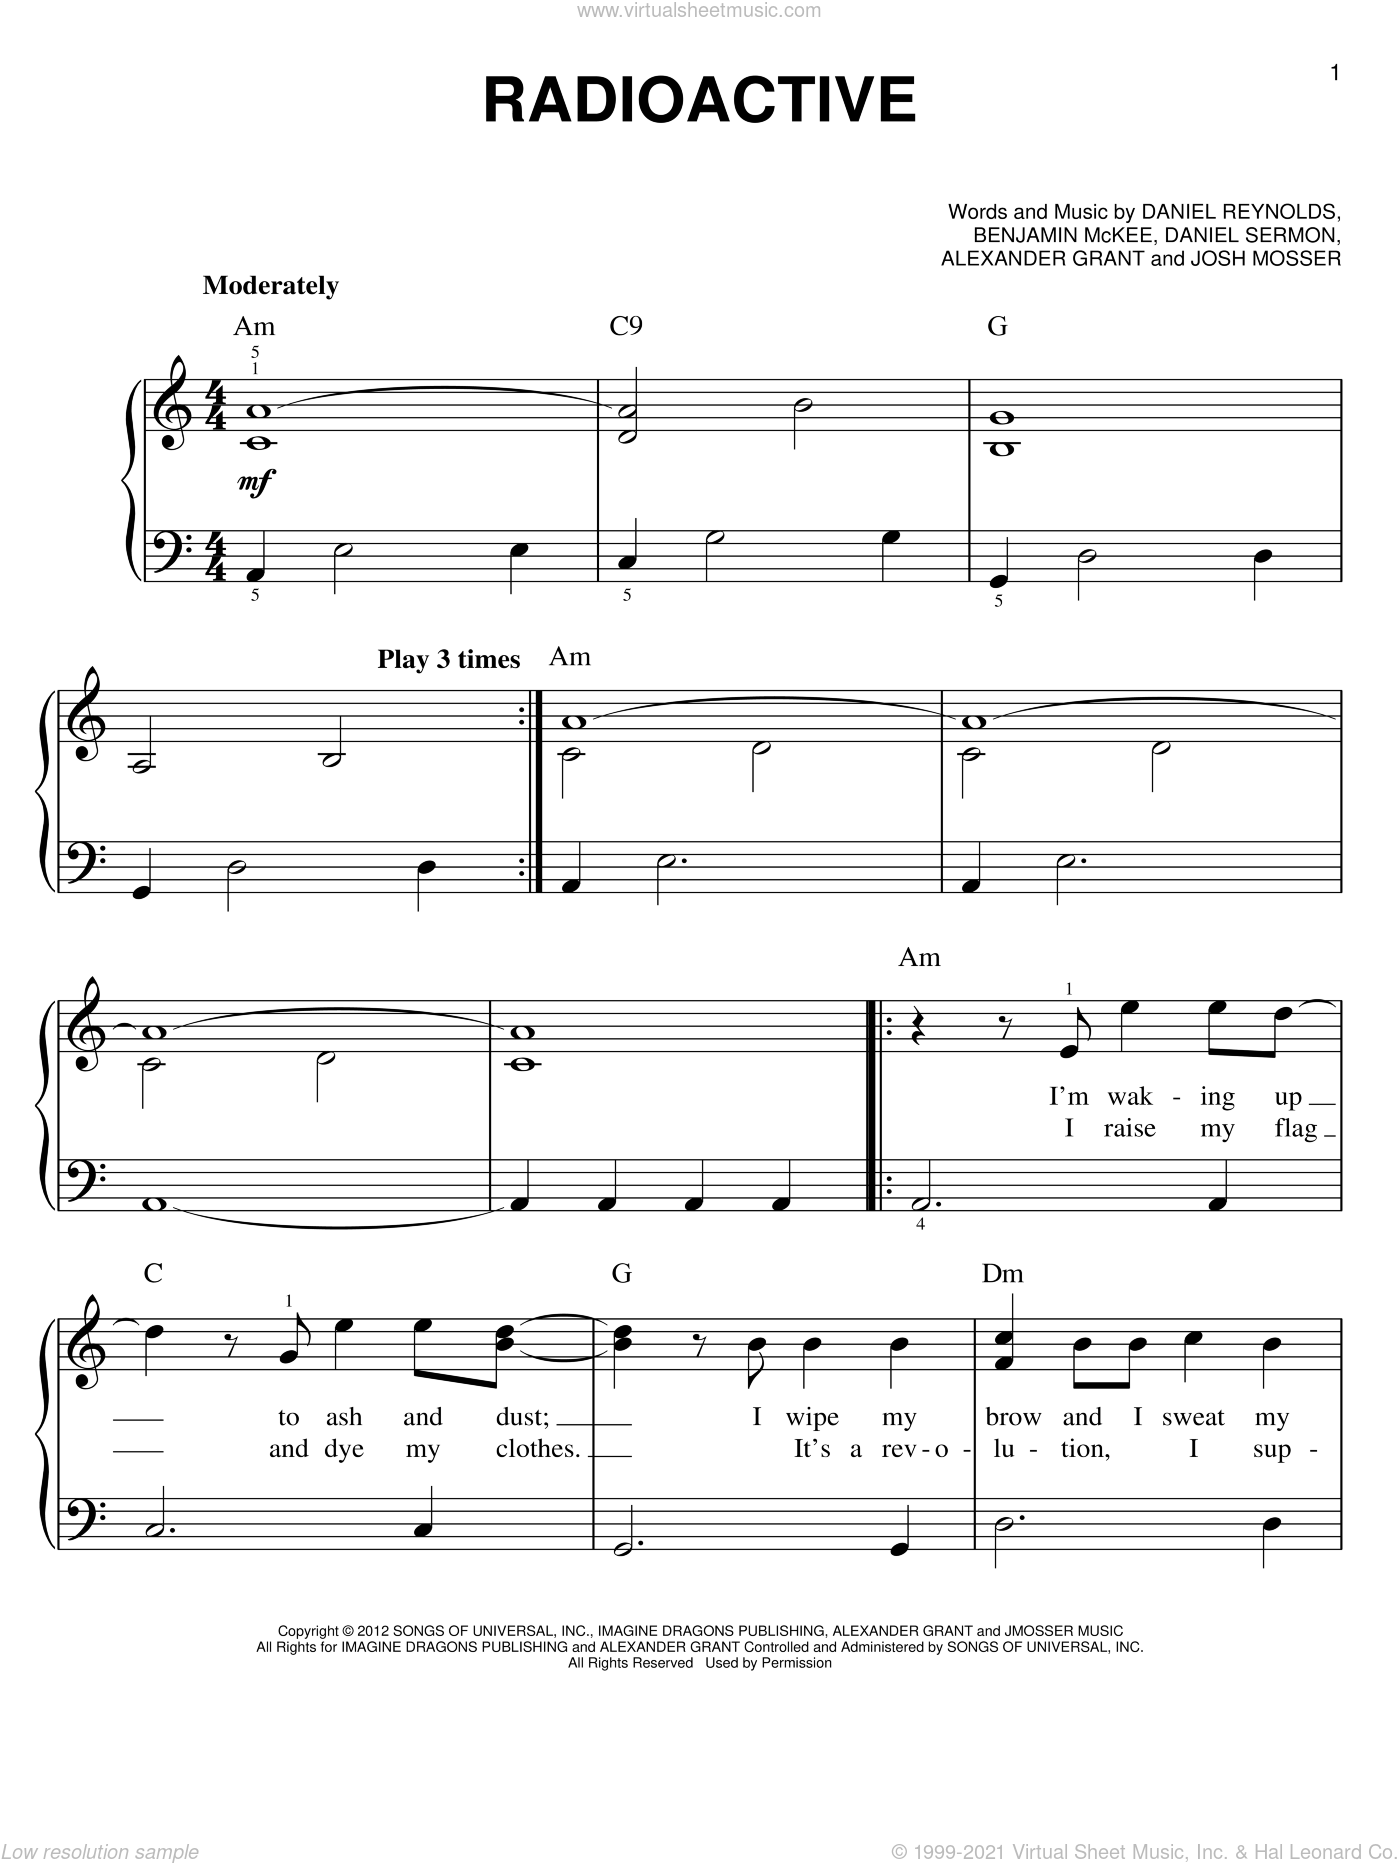 Dragons Radioactive Easy Sheet Music For Piano Solo Pdf - roblox piano sheets thunder